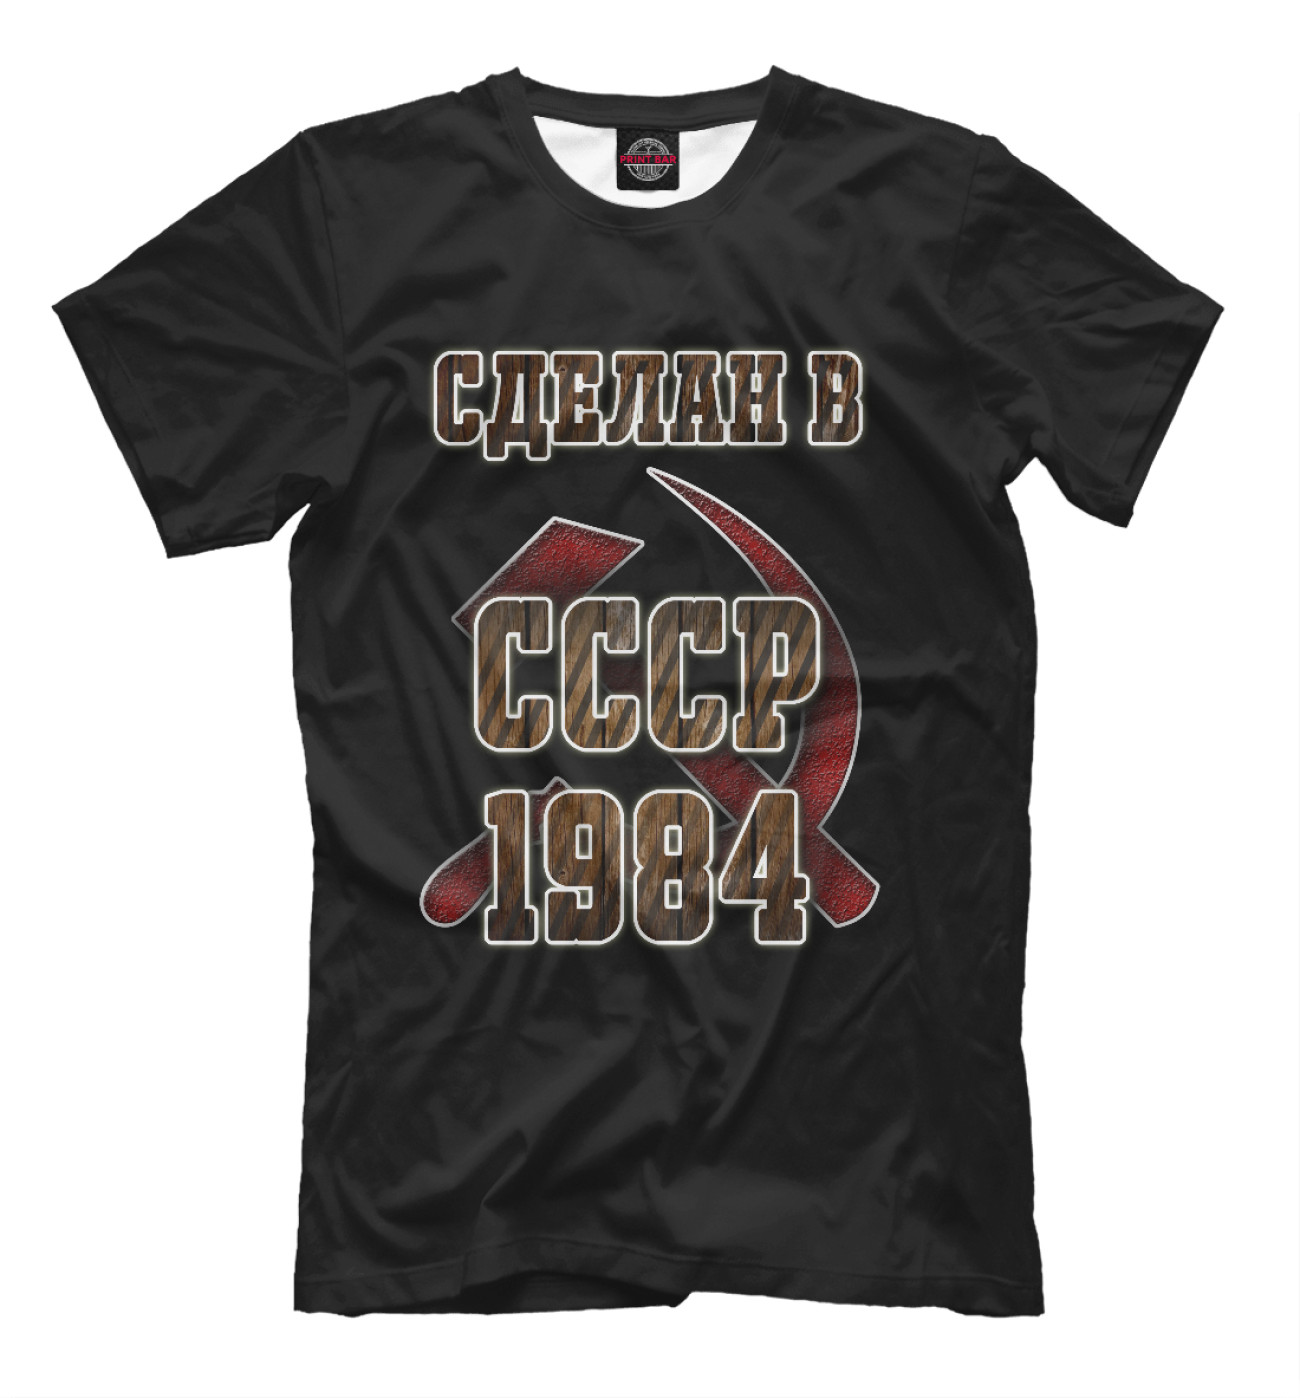 Мужская Футболка 1984, артикул: DVC-380456-fut-2